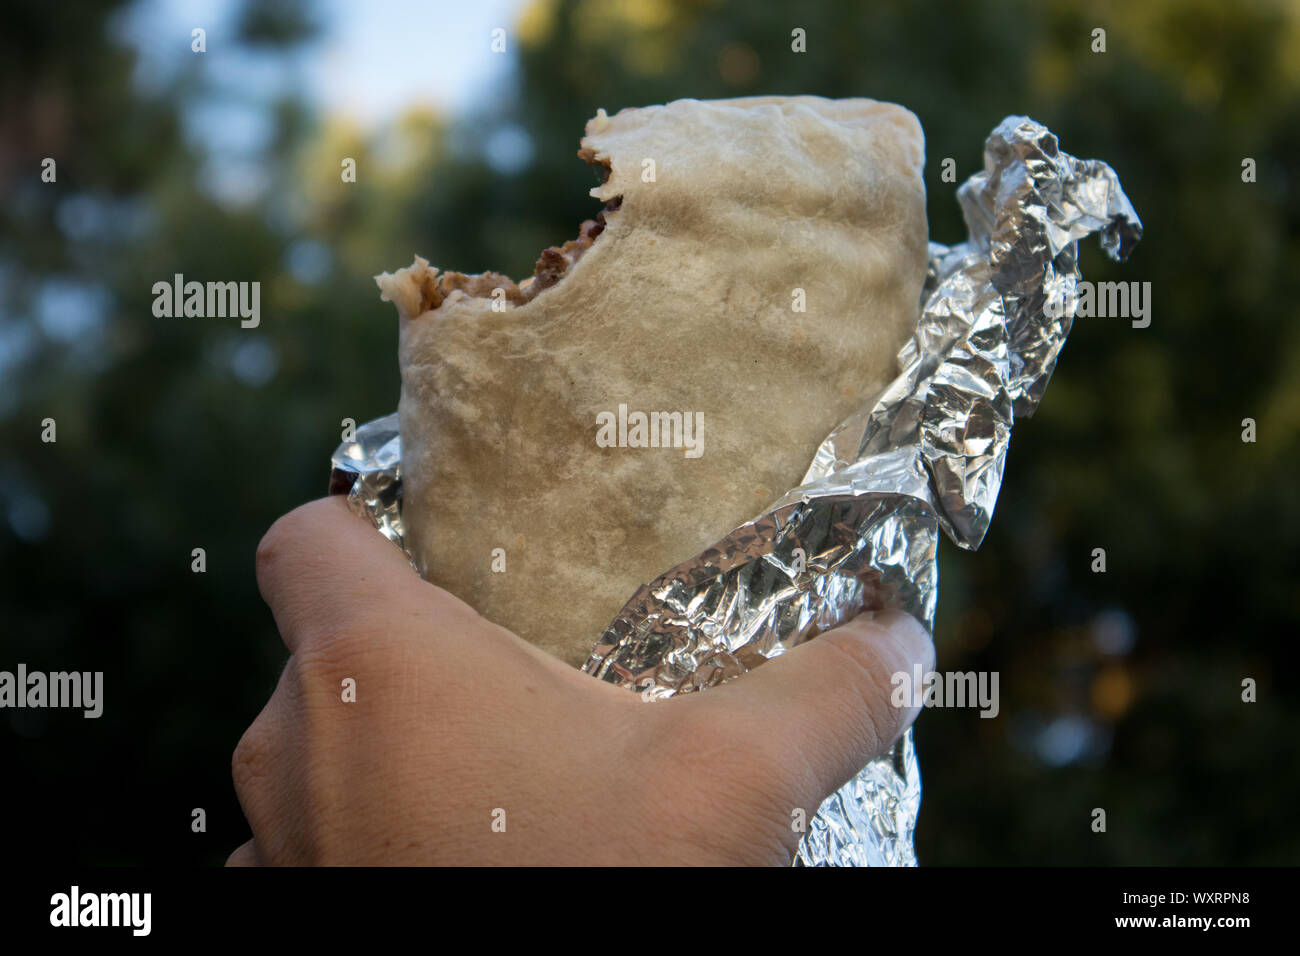 Holding Carne Asada Burrito Wrapped in Foil Stock Photo